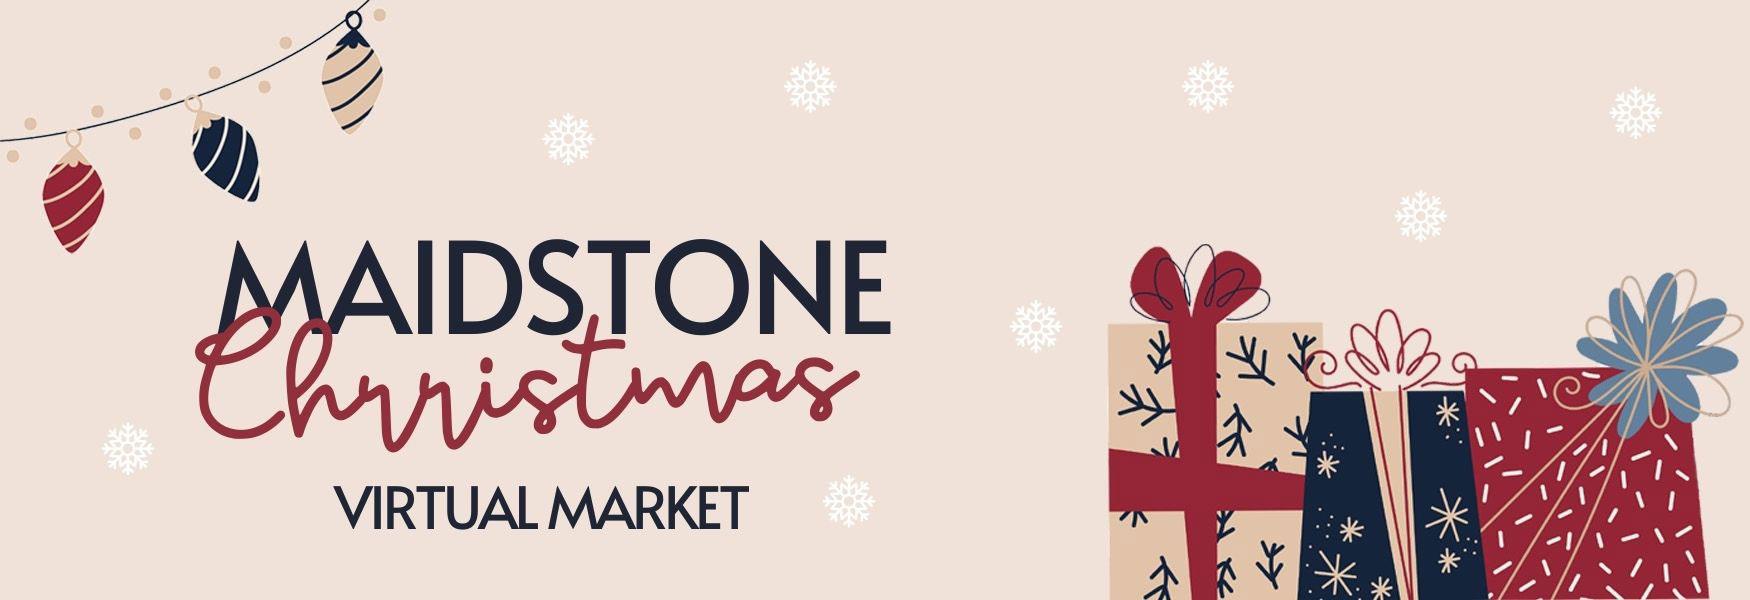 Maidstone Christmas Market